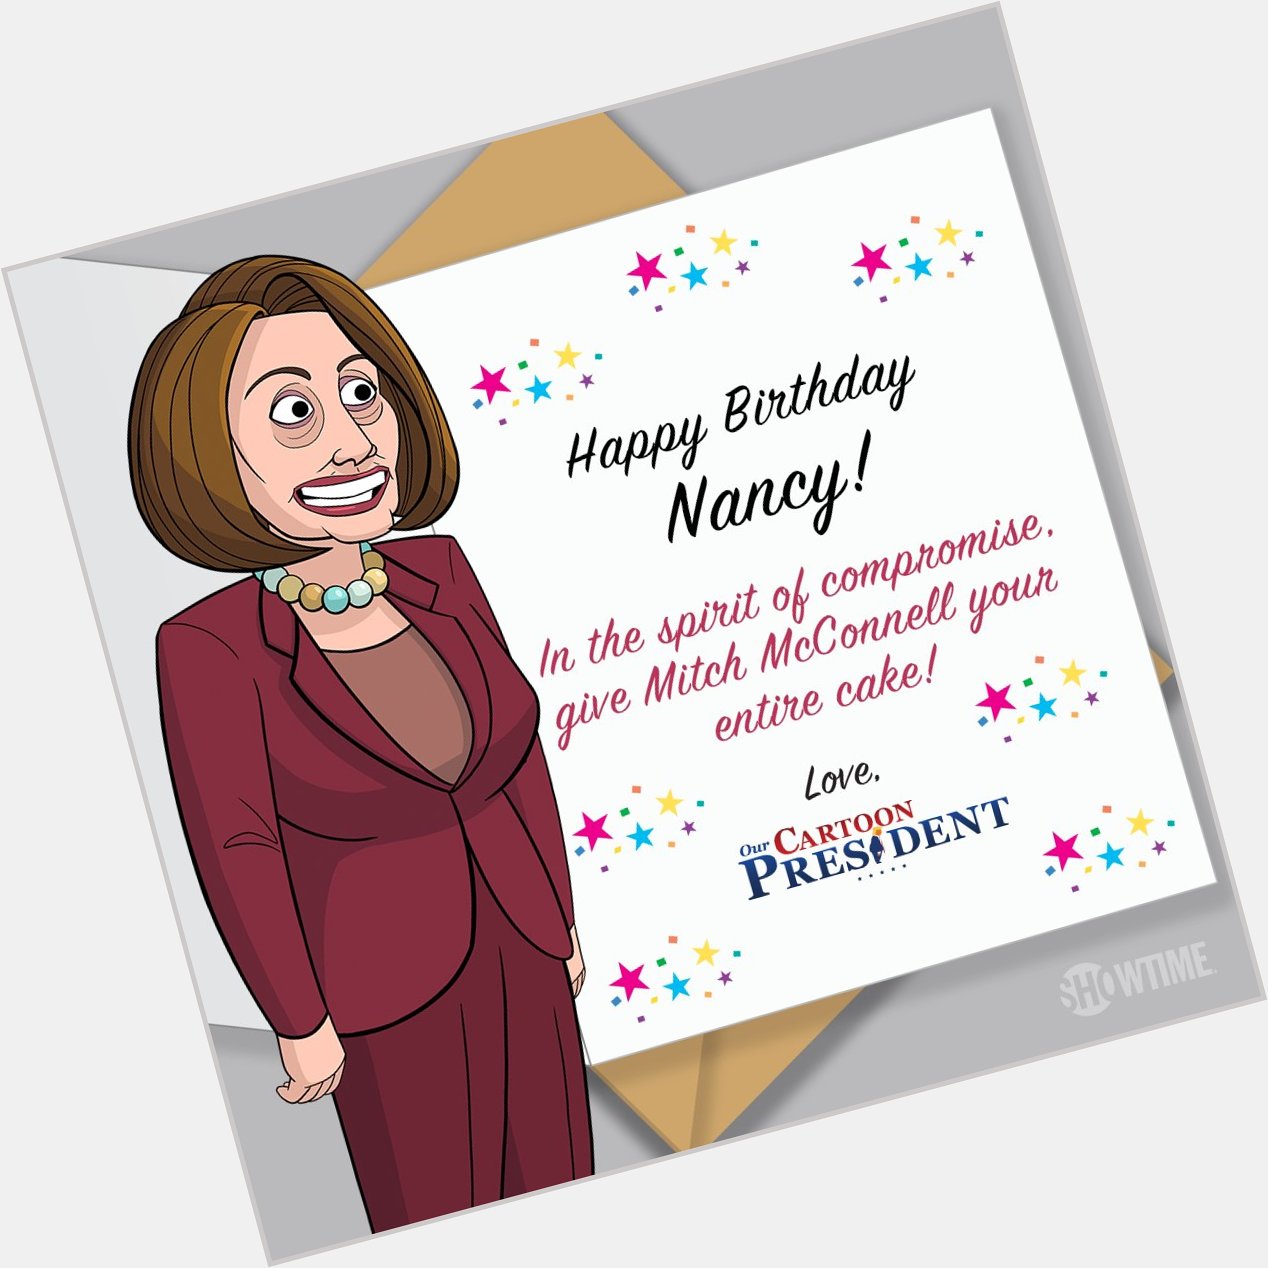 Happy birthday to reluctant line of defense Cartoon Nancy Pelosi! 